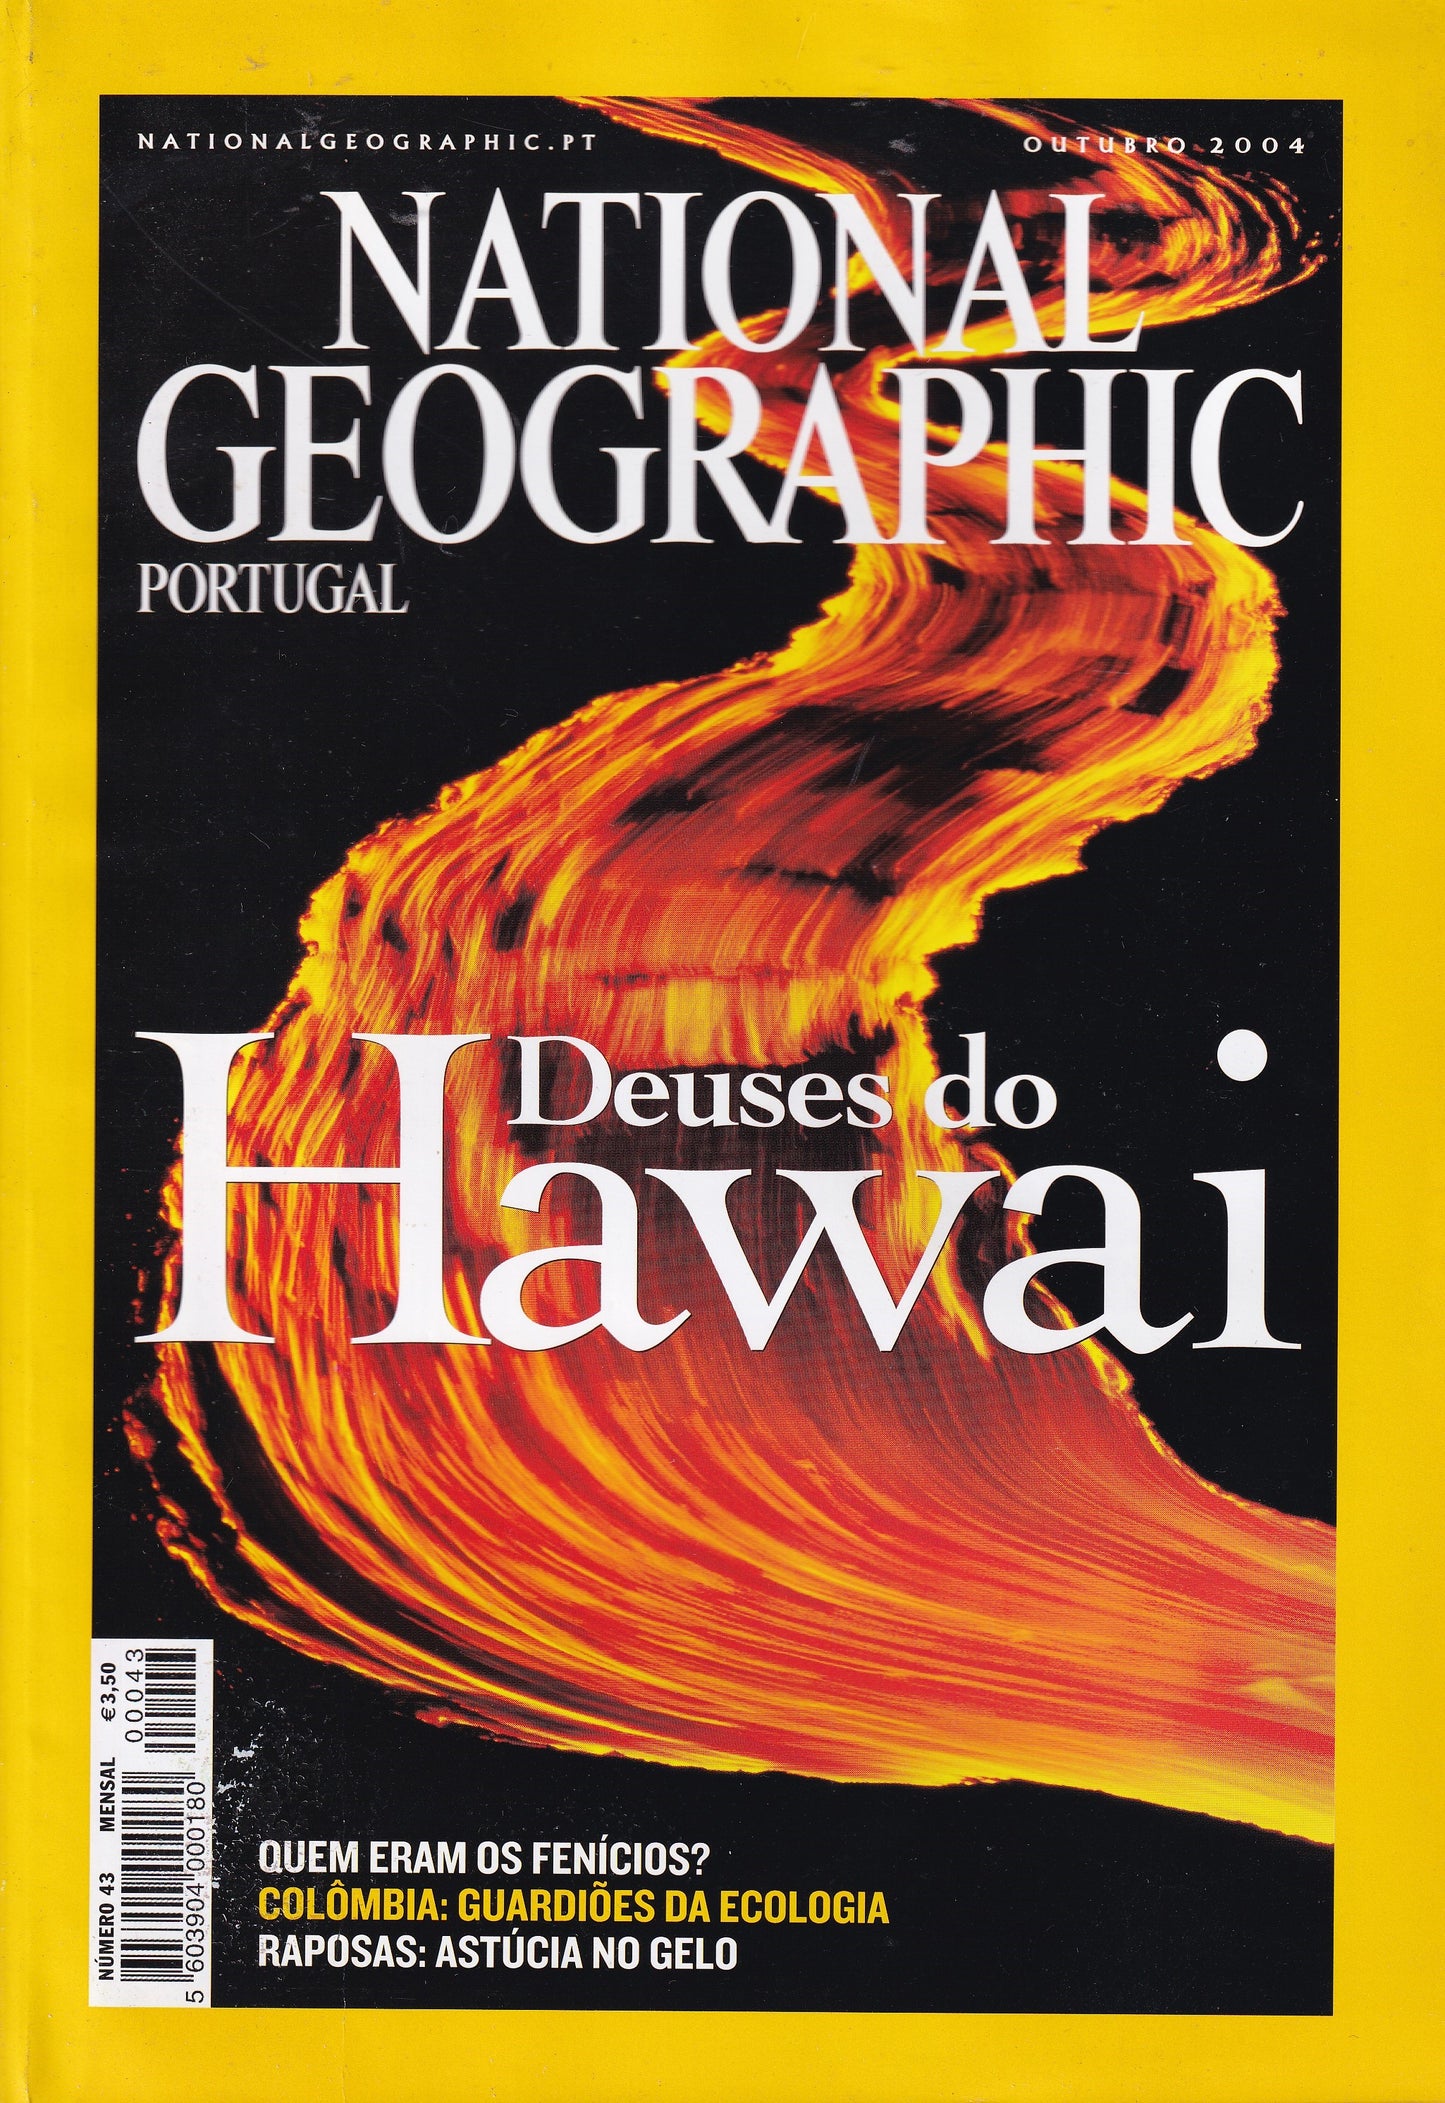 Revista National Geographic Portugal #43(Deuses do Hawail) Out.2004 - USADO